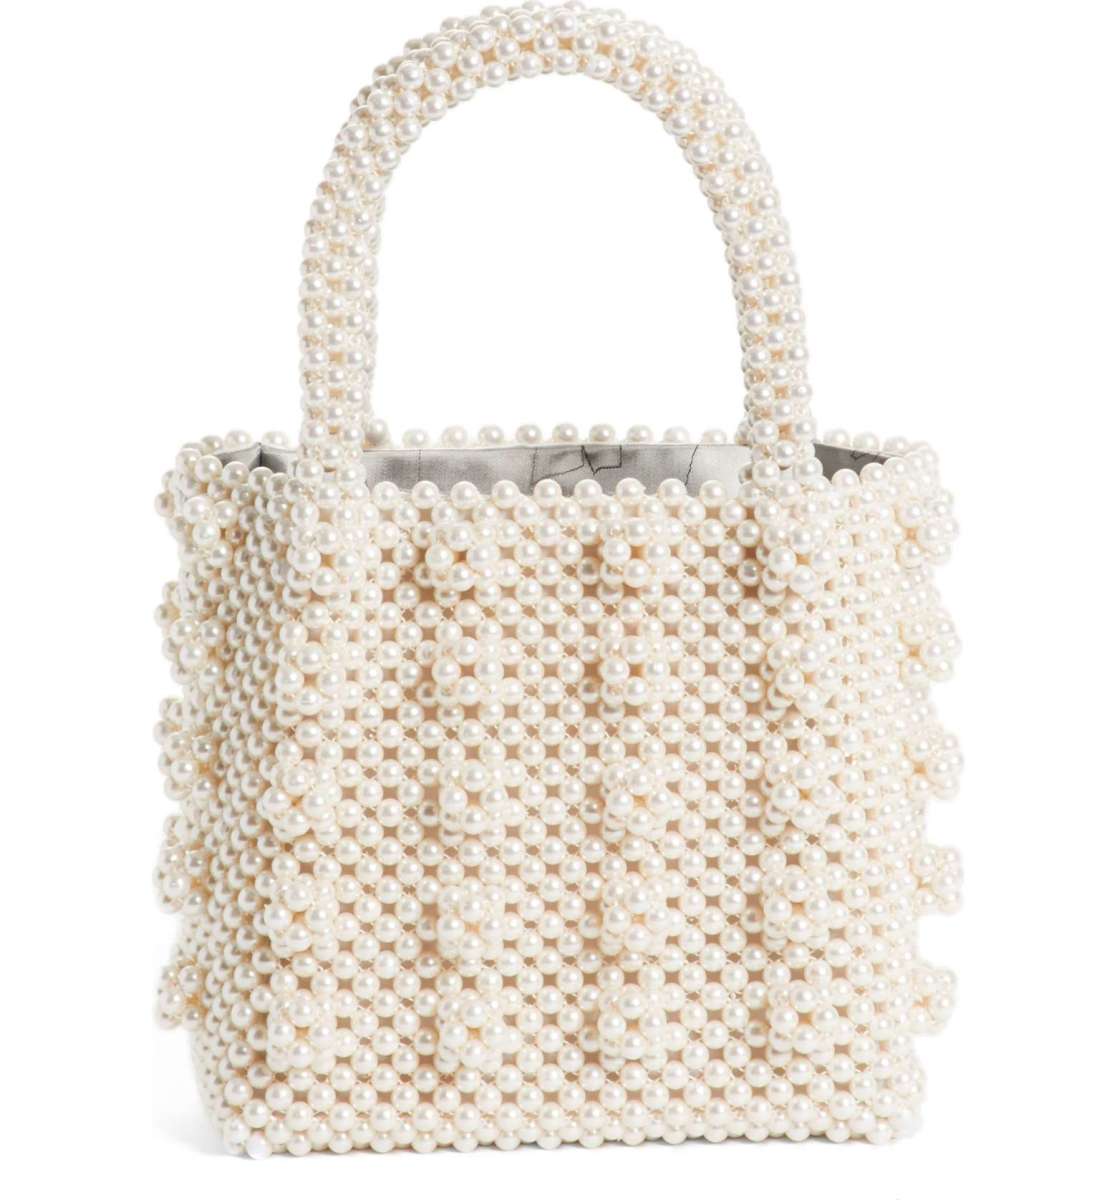 Shrimps Antonia Small Imitation Pearl Beaded Handbag, $685, available at Nordstrom.